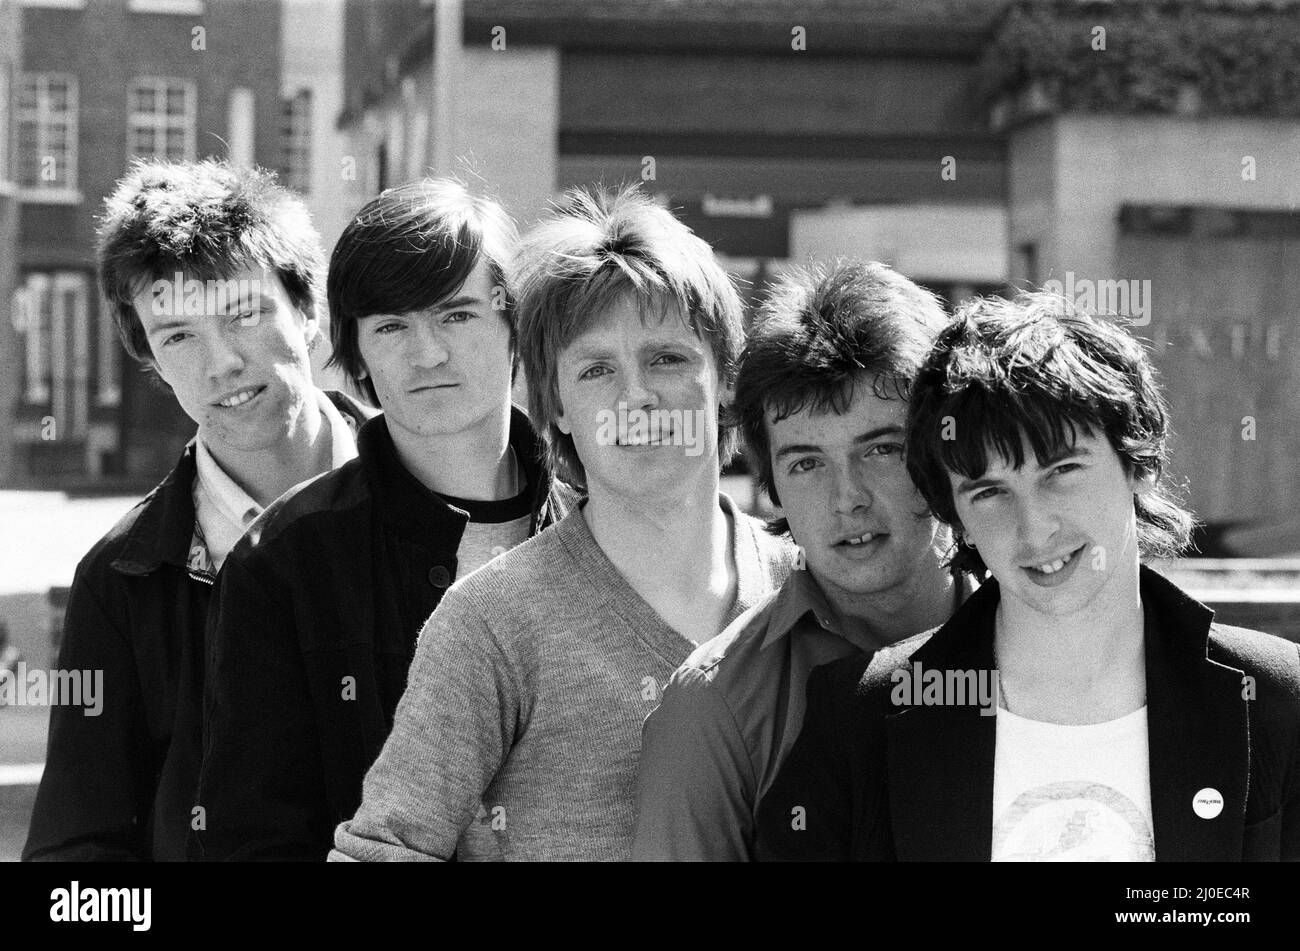 The Undertones. 15th May 1980. Stock Photo